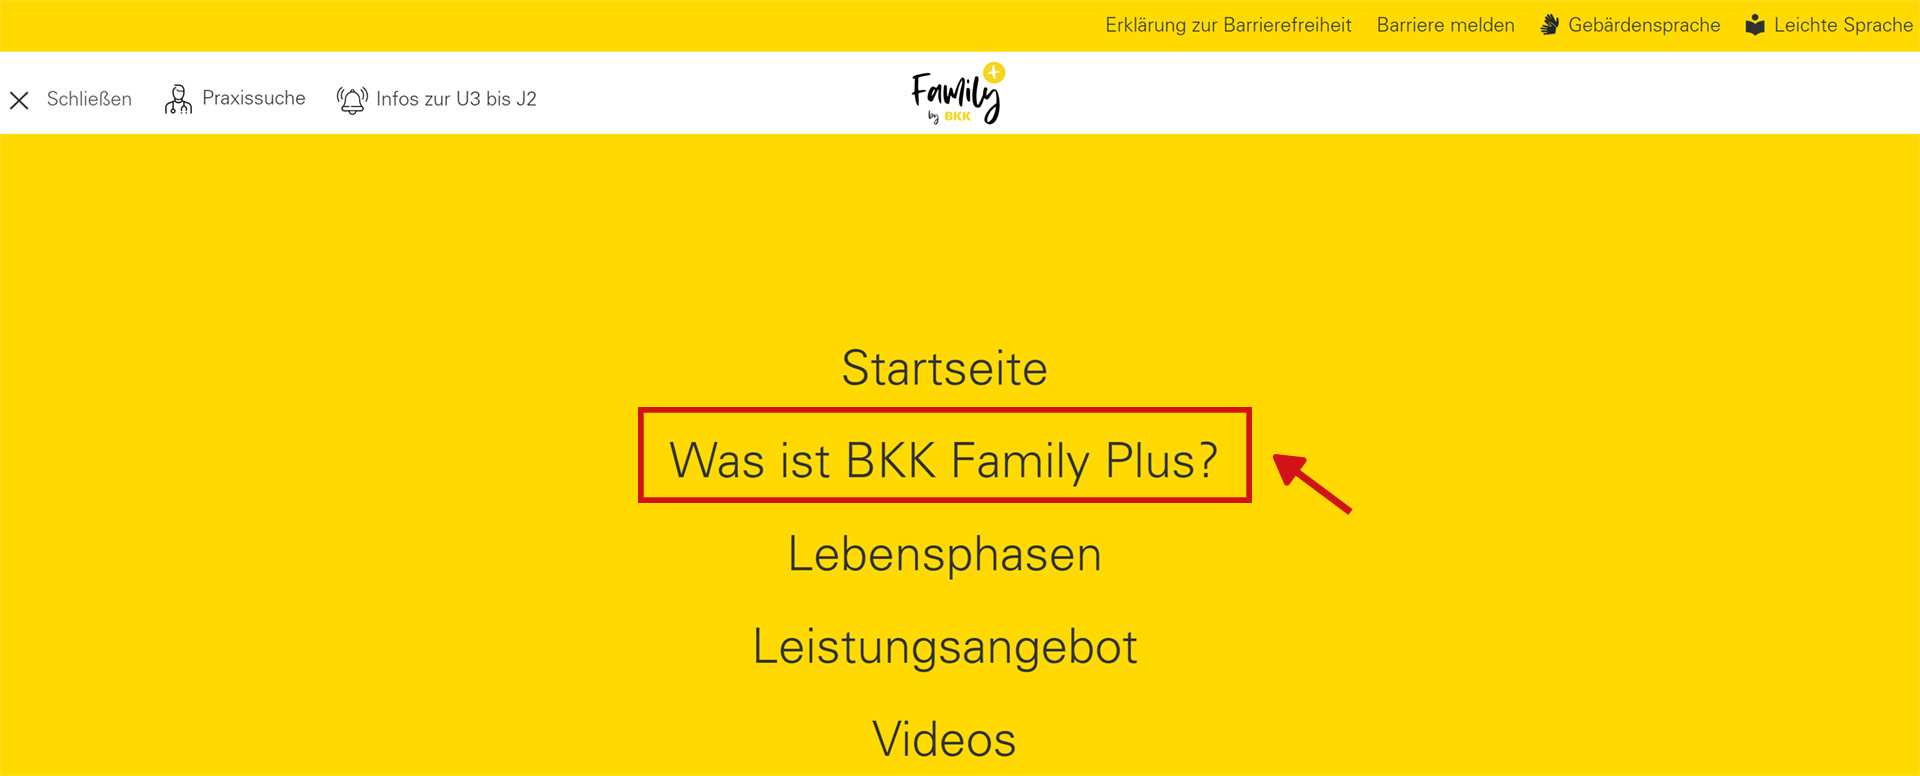 Screenshot bkkfamilyplus.de_Menue_Was ist BKK Family Plus?